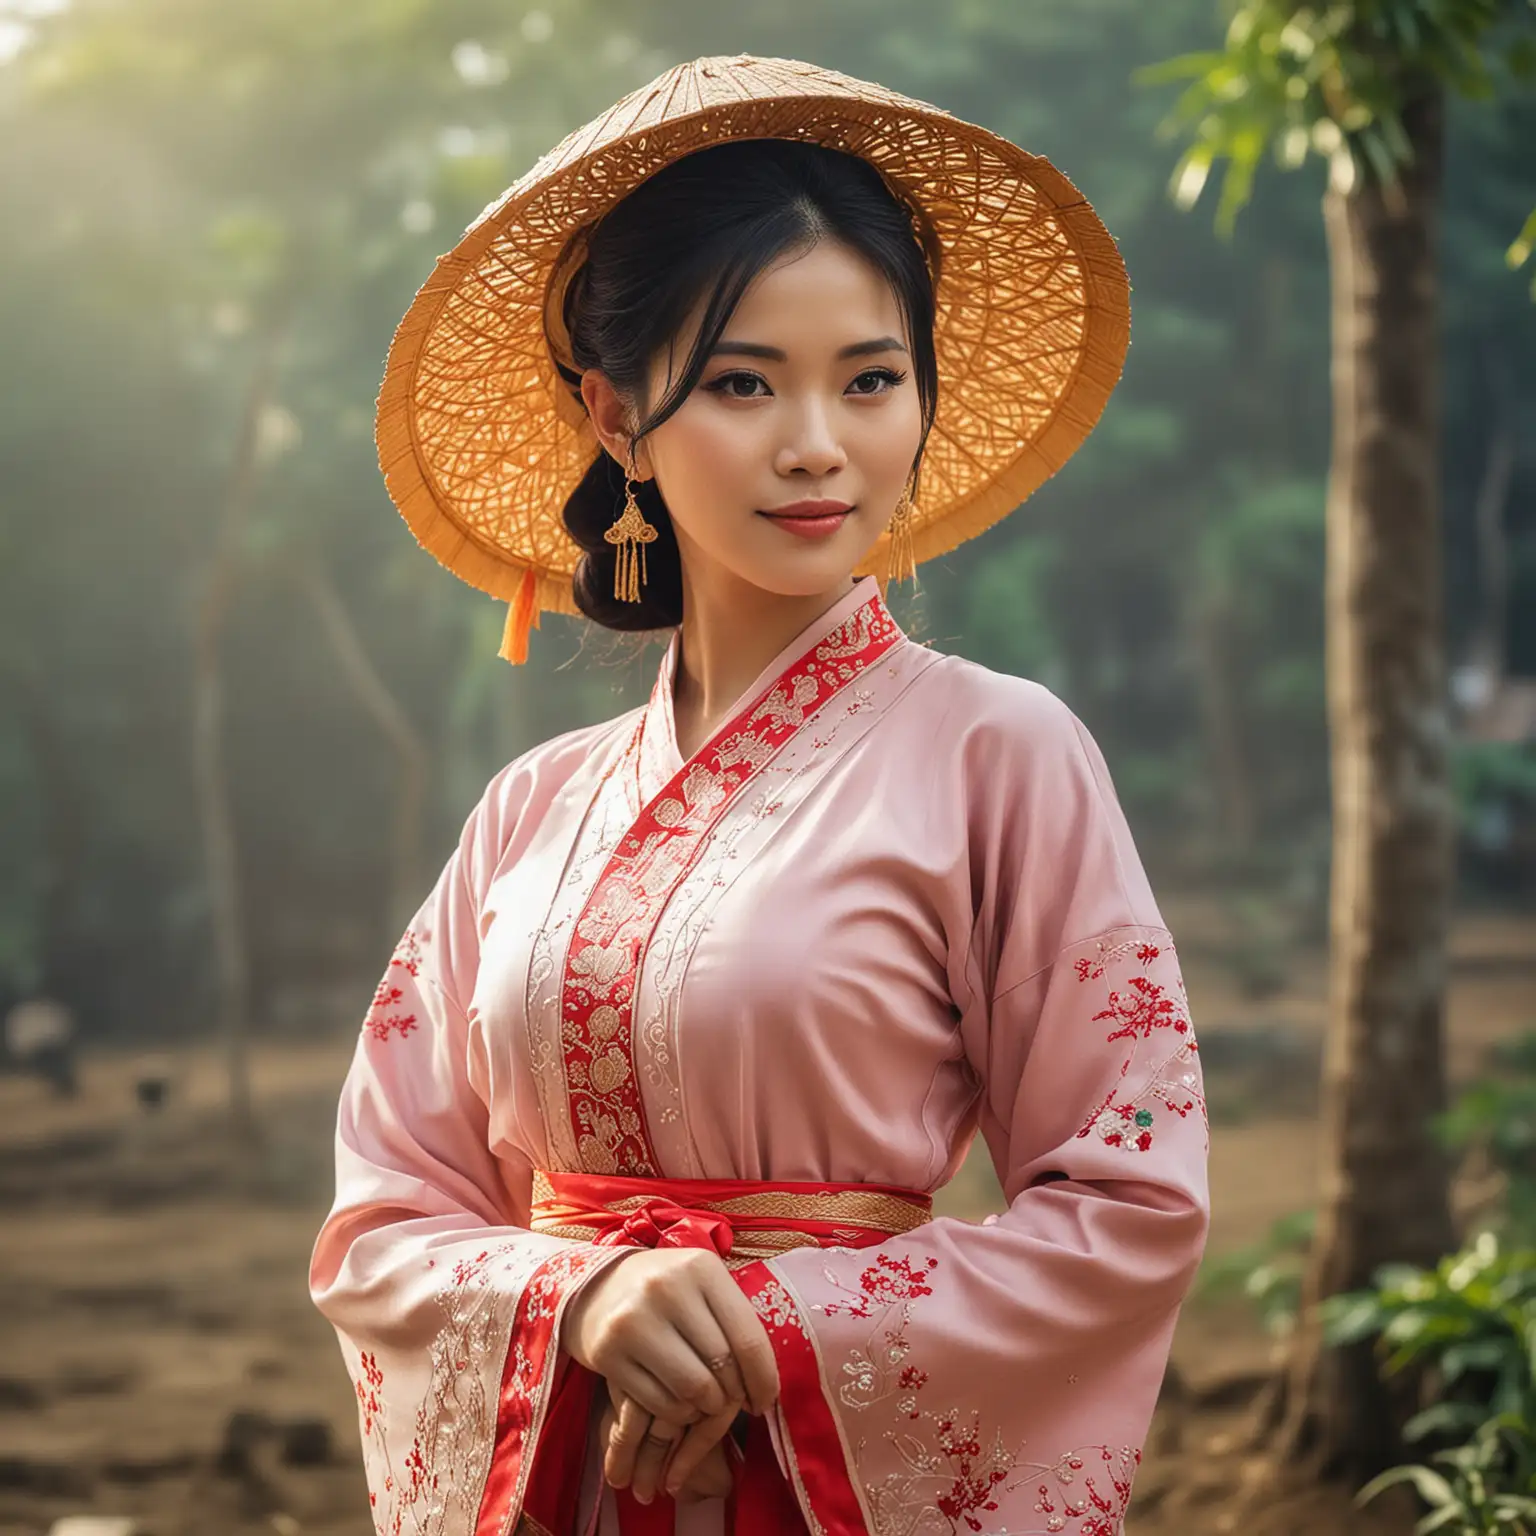 Vietnamese Woman in Traditional Dress Walking Through Rice Fields